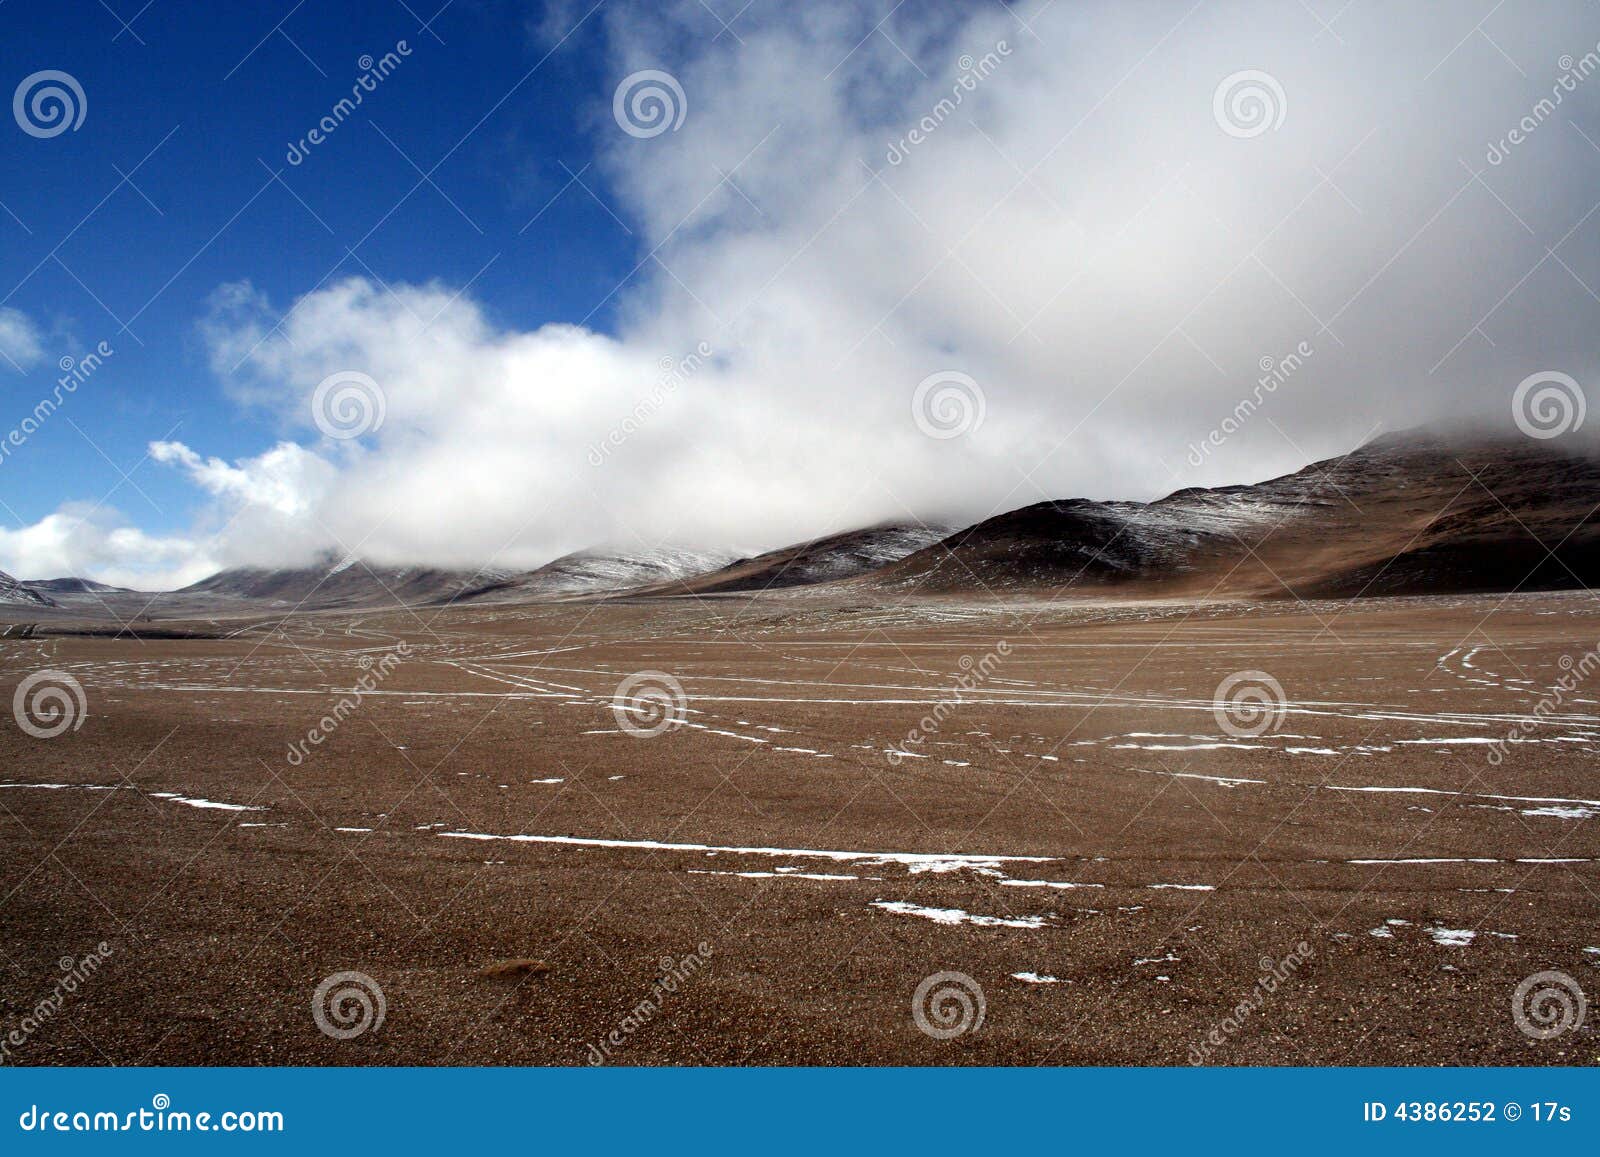 wild scene of highland moutain pamirs tibet